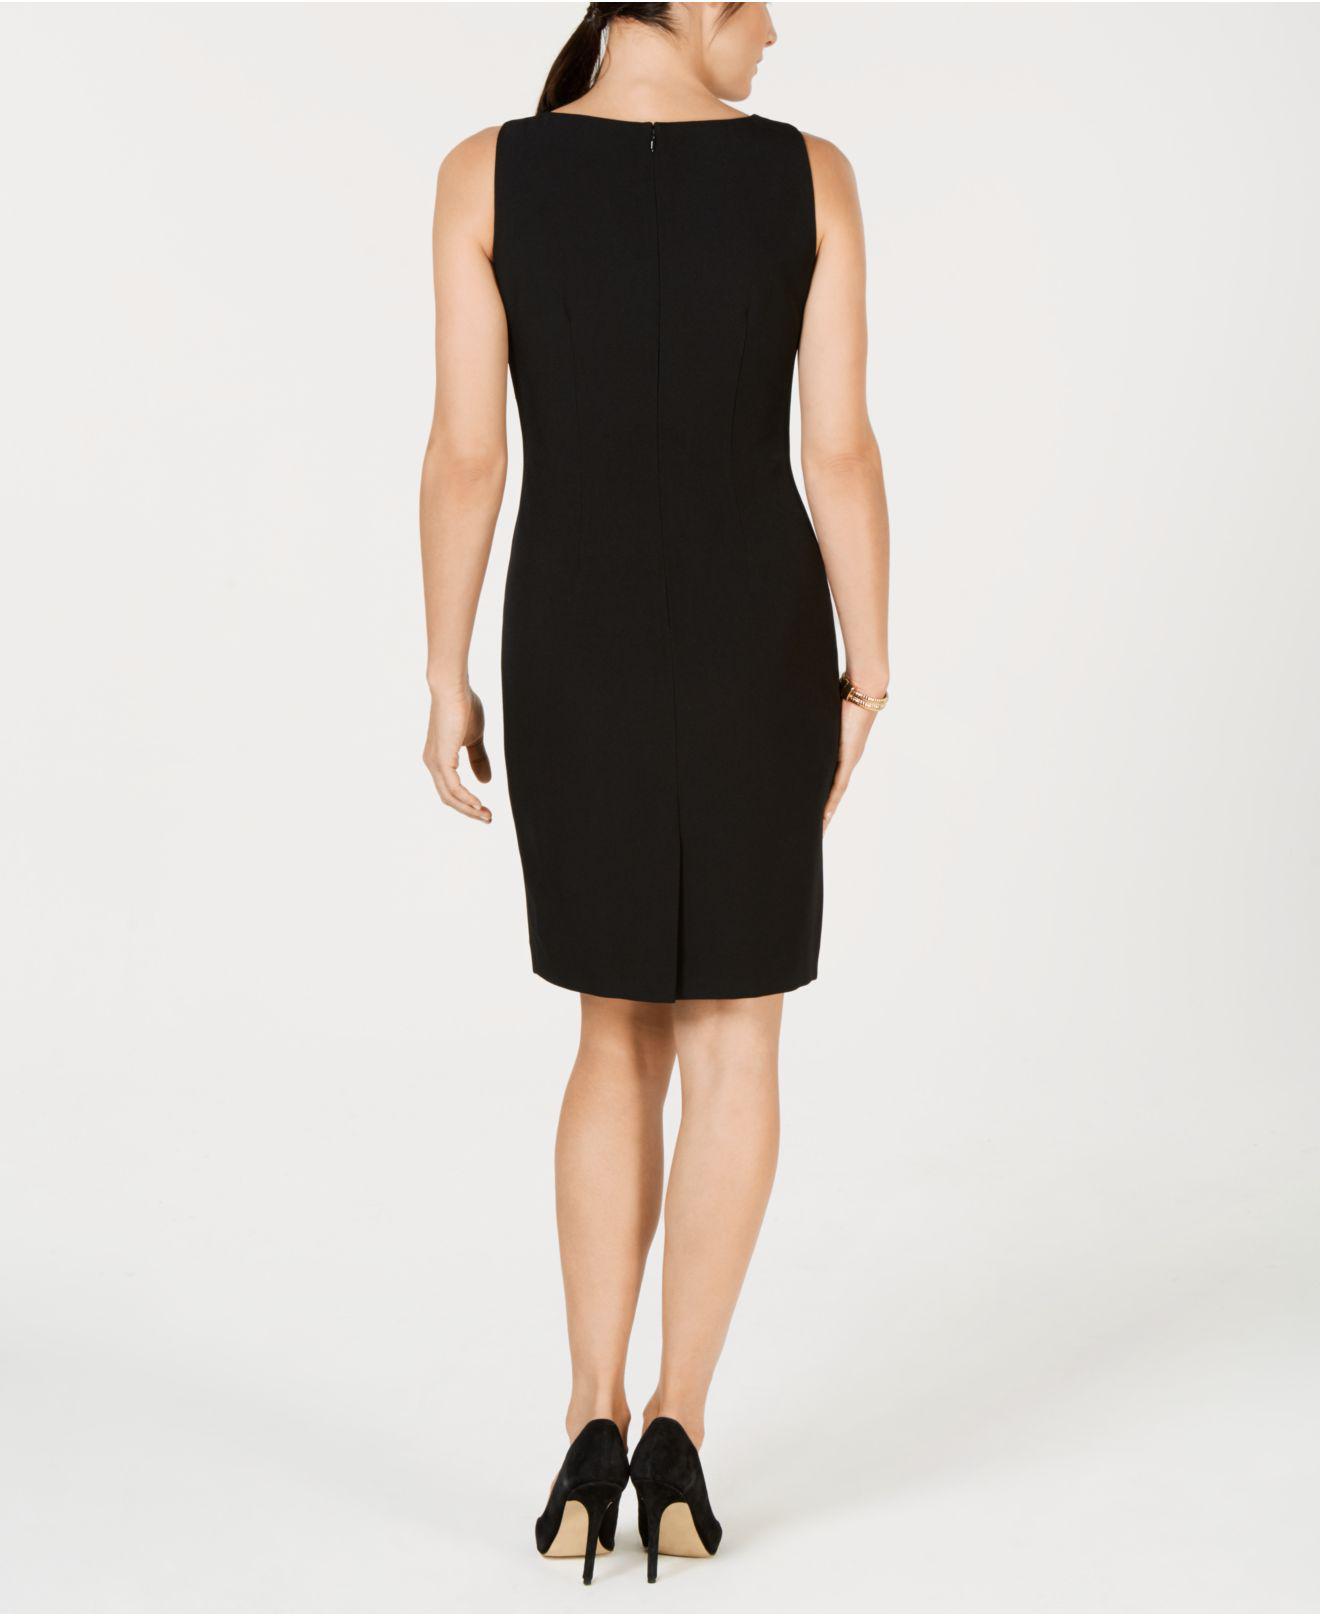 Lyst - Kasper Embellished Sleeveless Sheath Dress in Black